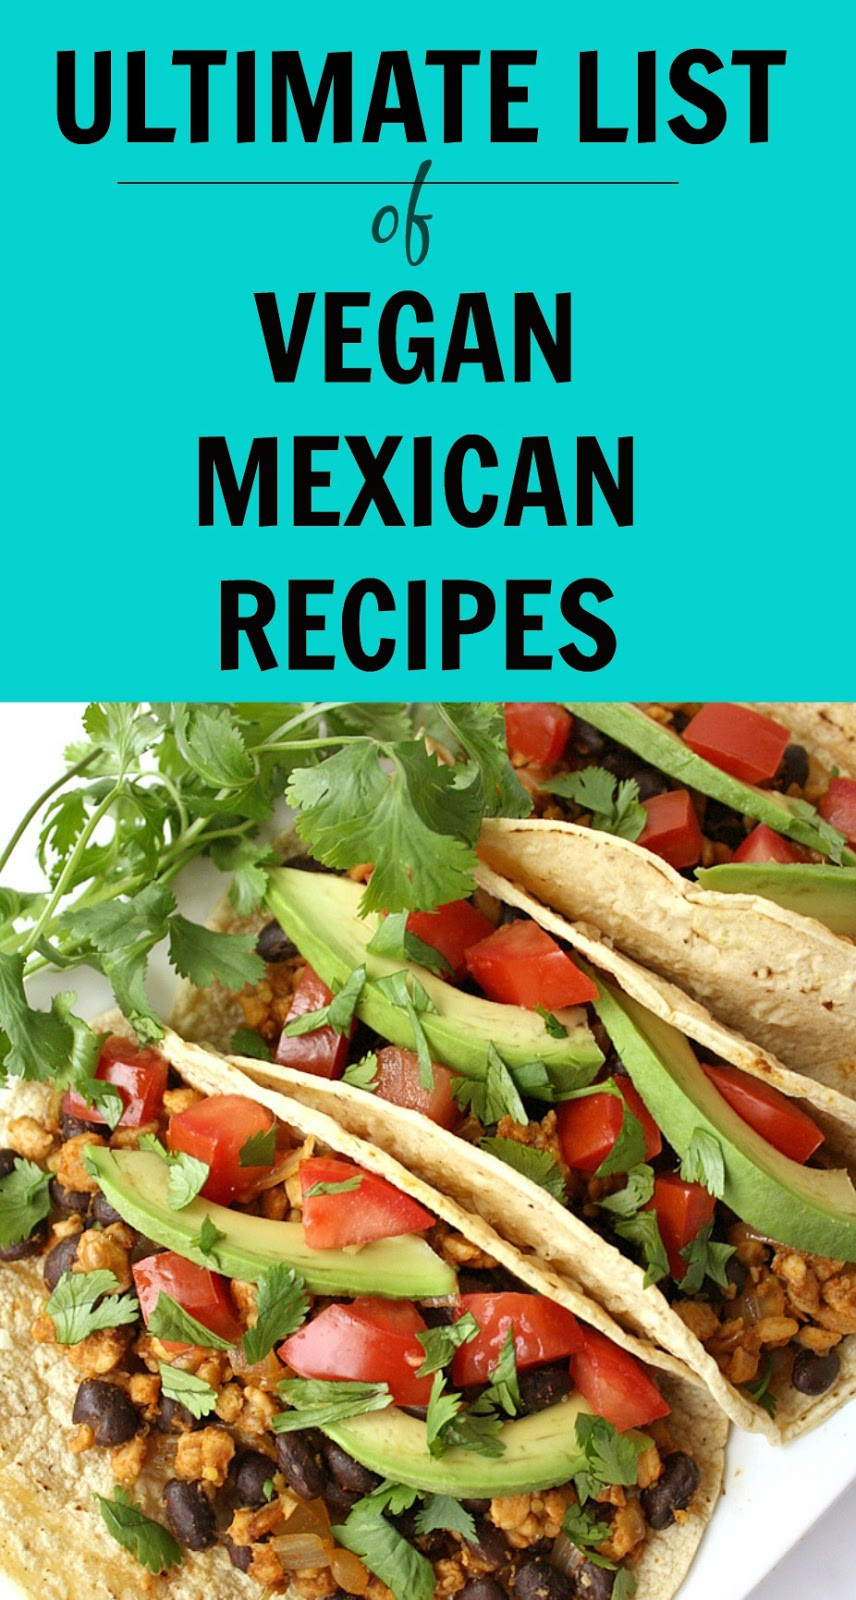 Vegan Mexican Food Recipes
 The Garden Grazer Ultimate List of Vegan Mexican Recipes